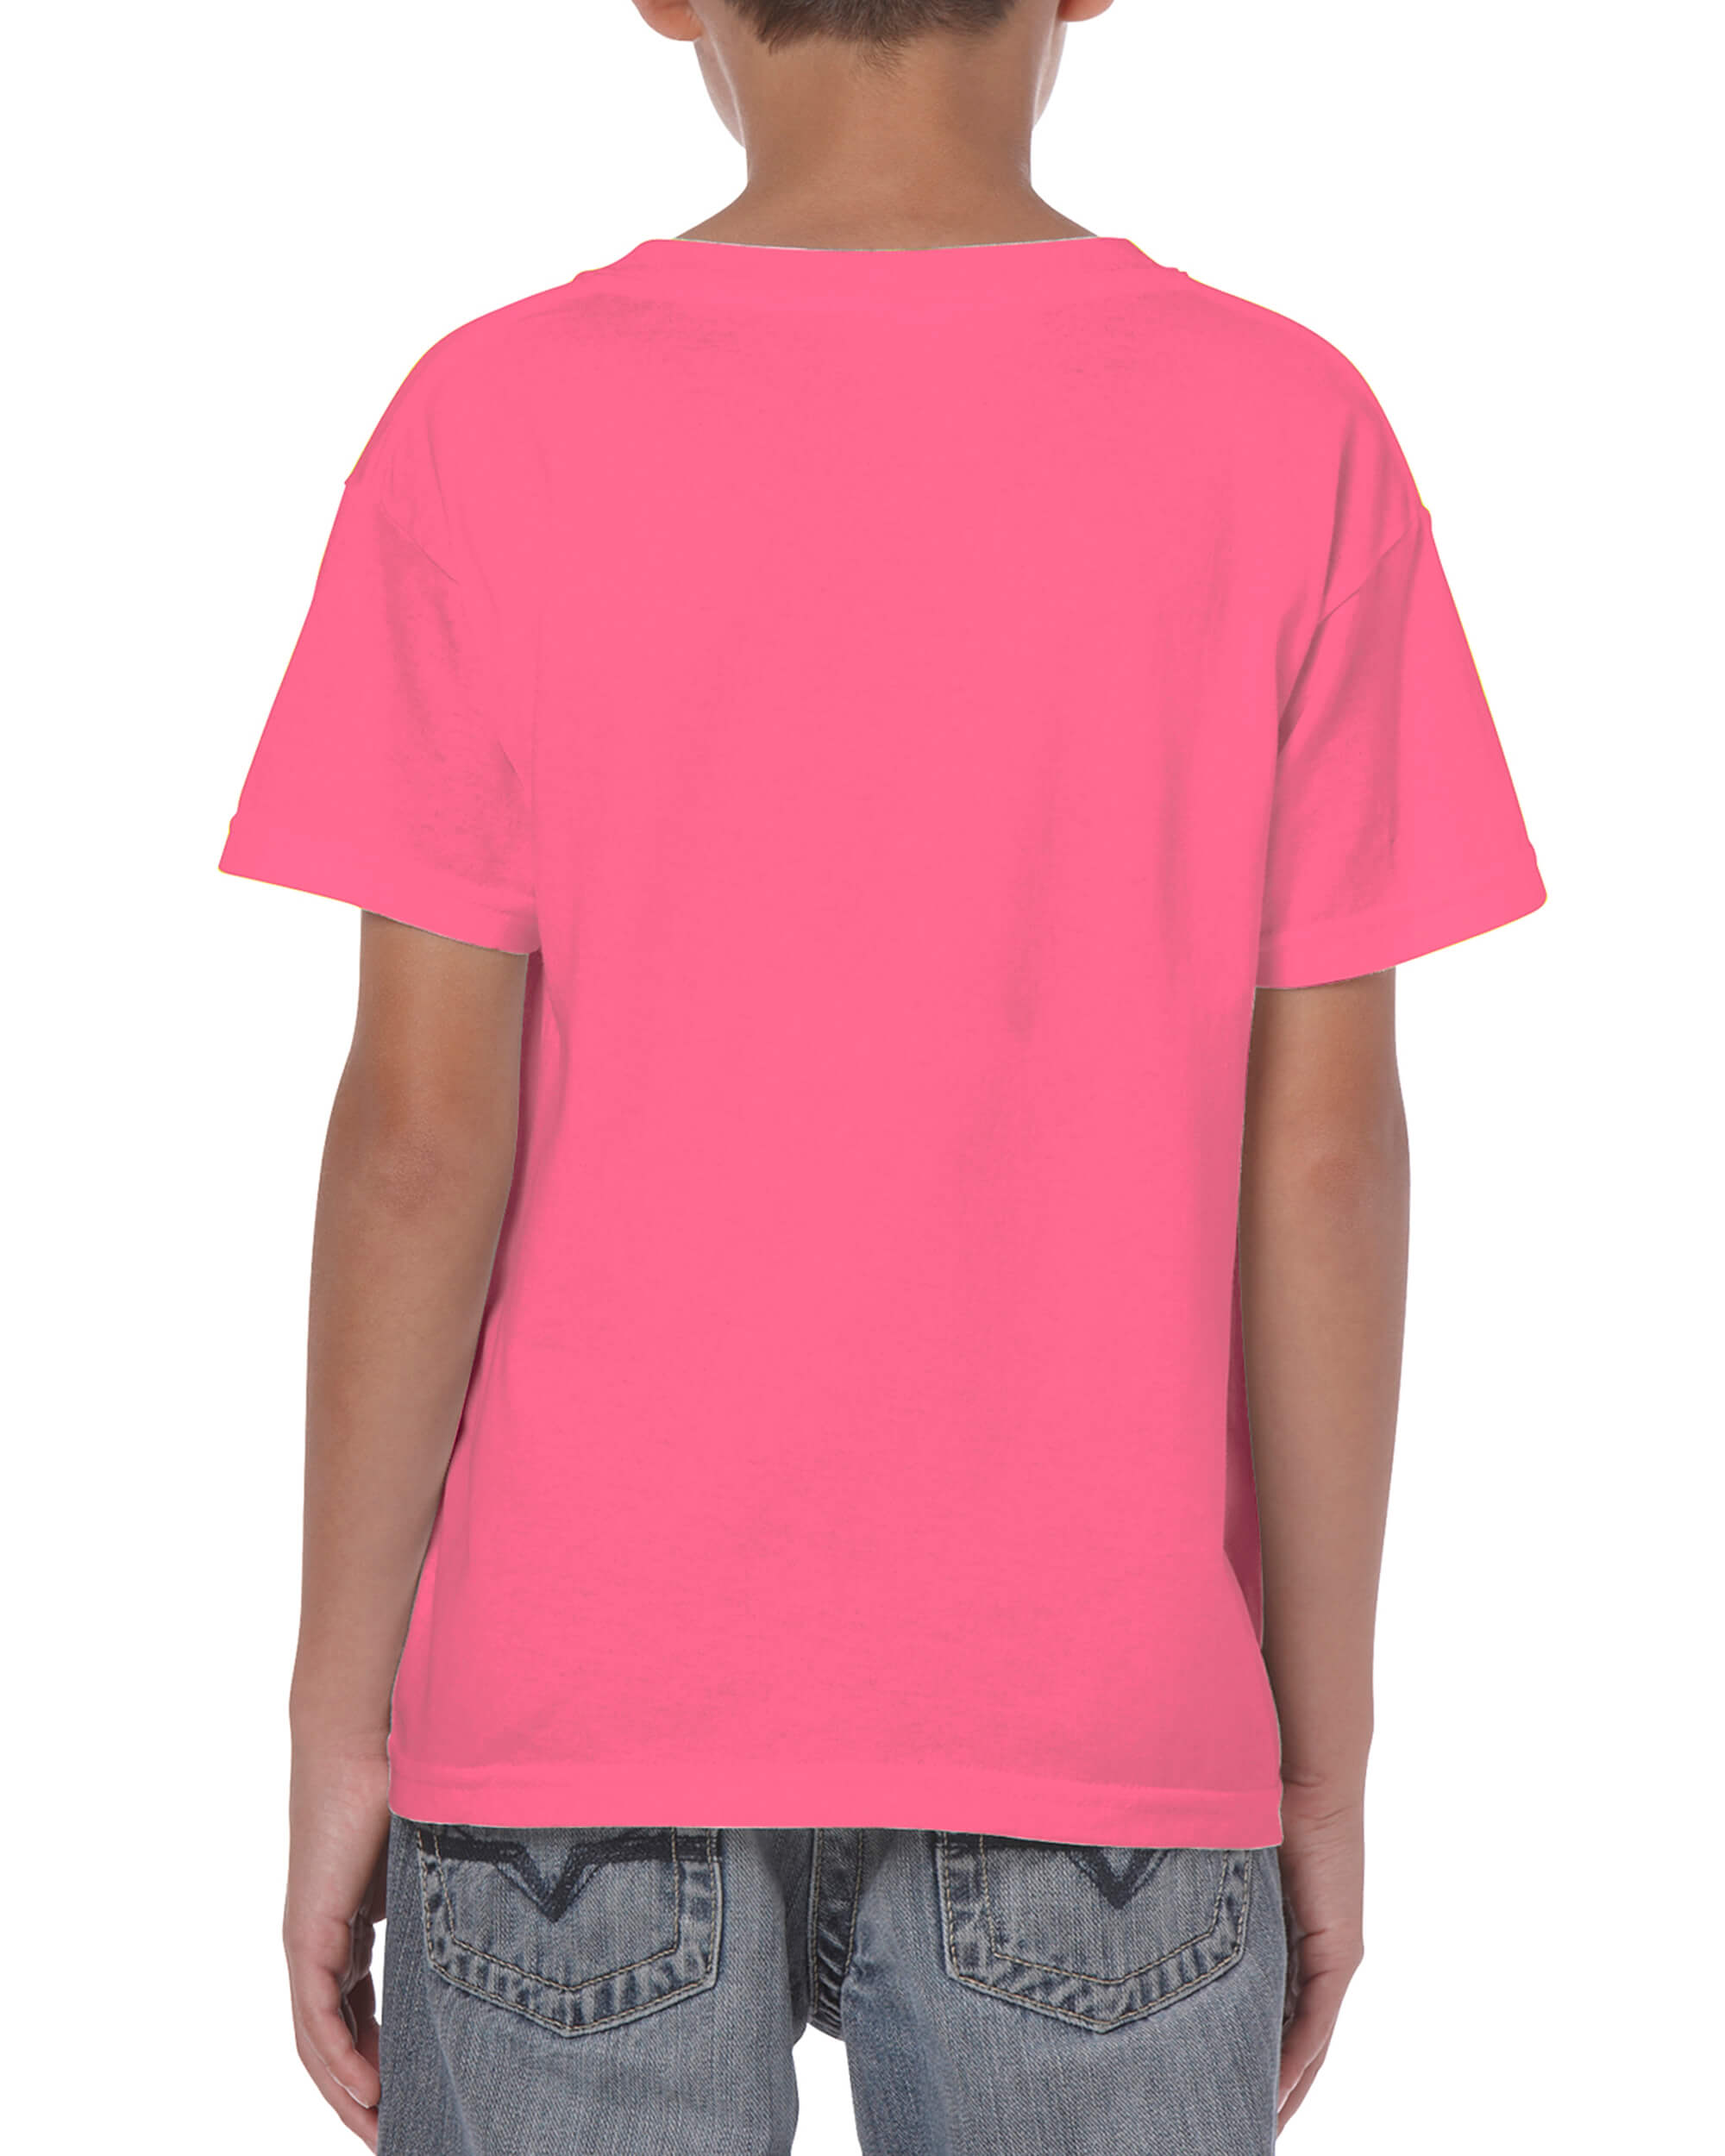 Kids Tshirt - Safety Pink